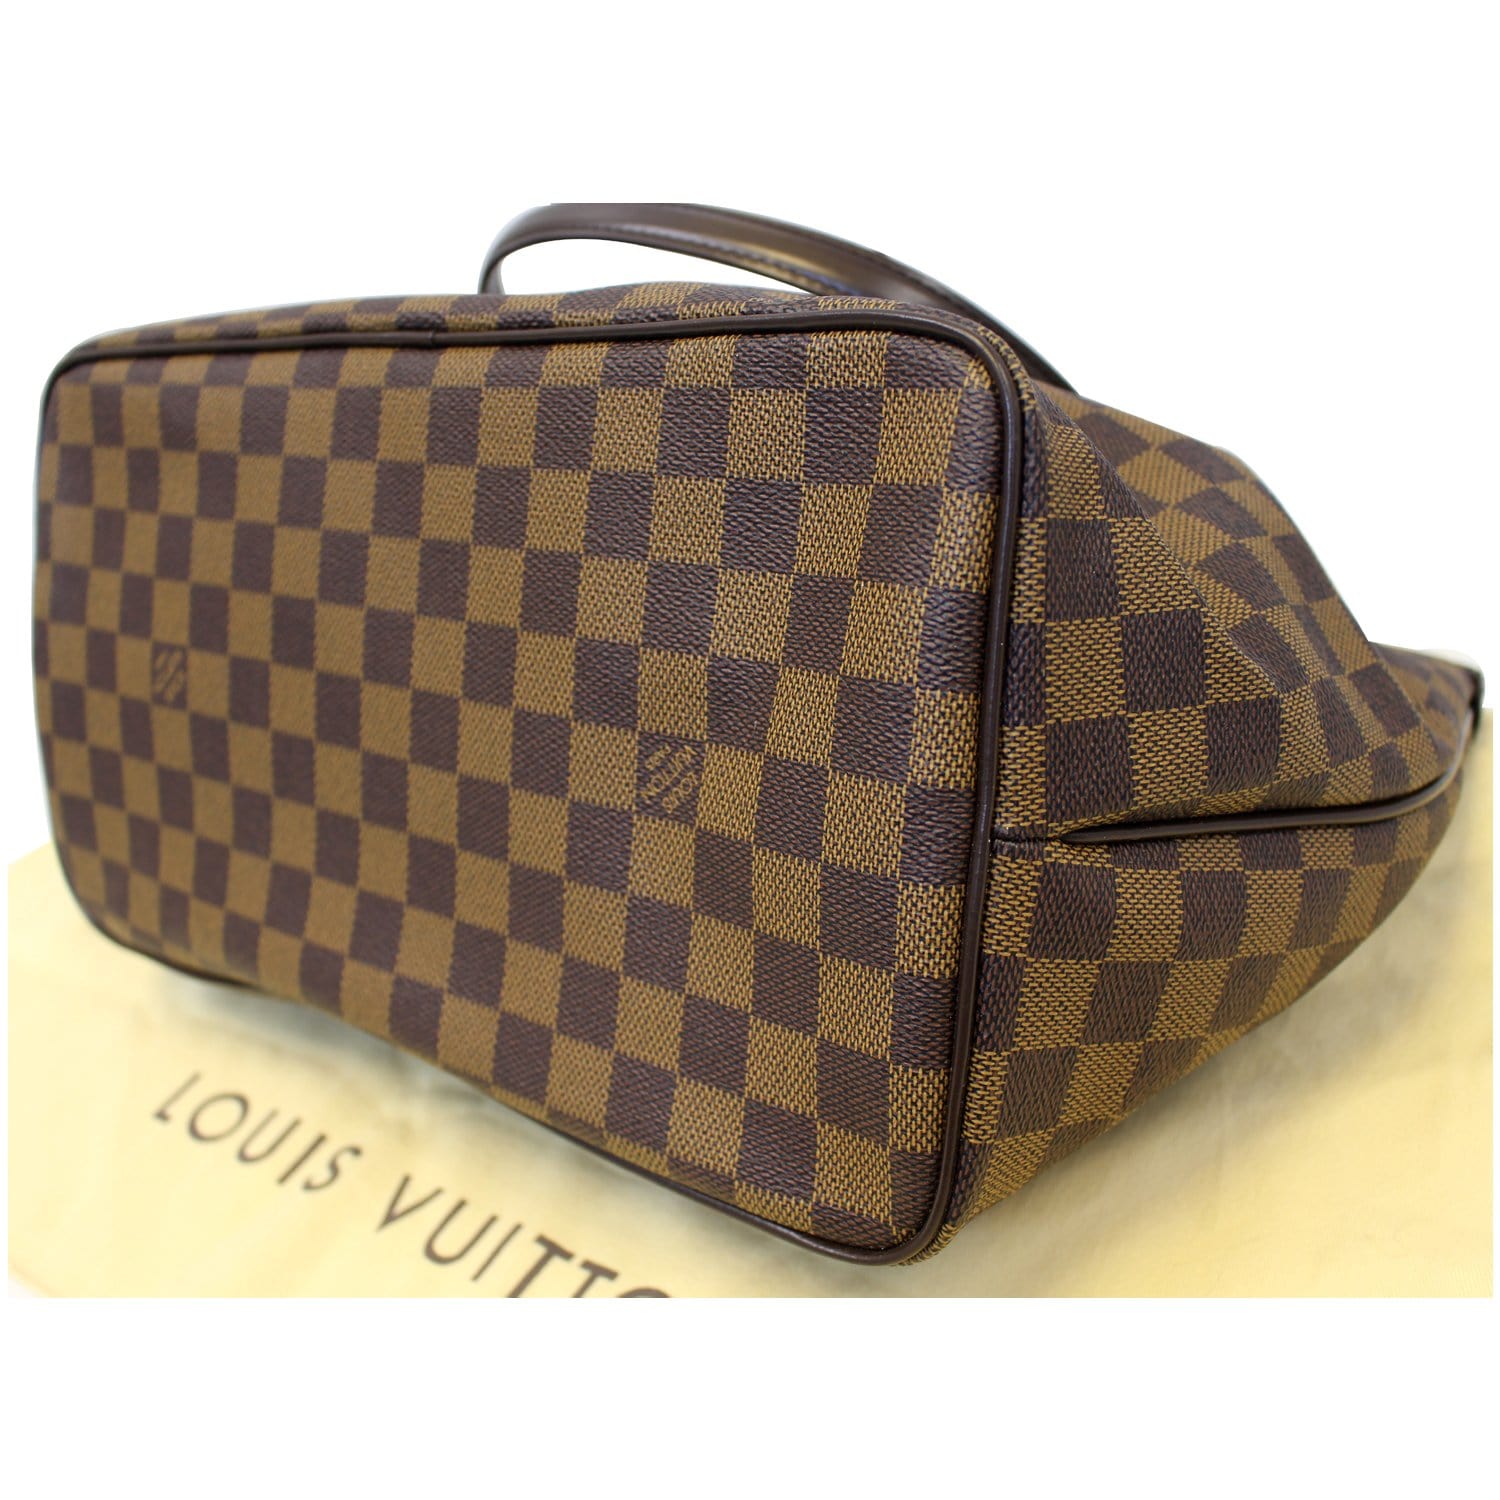 Louis Vuitton Westminster Handbag Damier PM